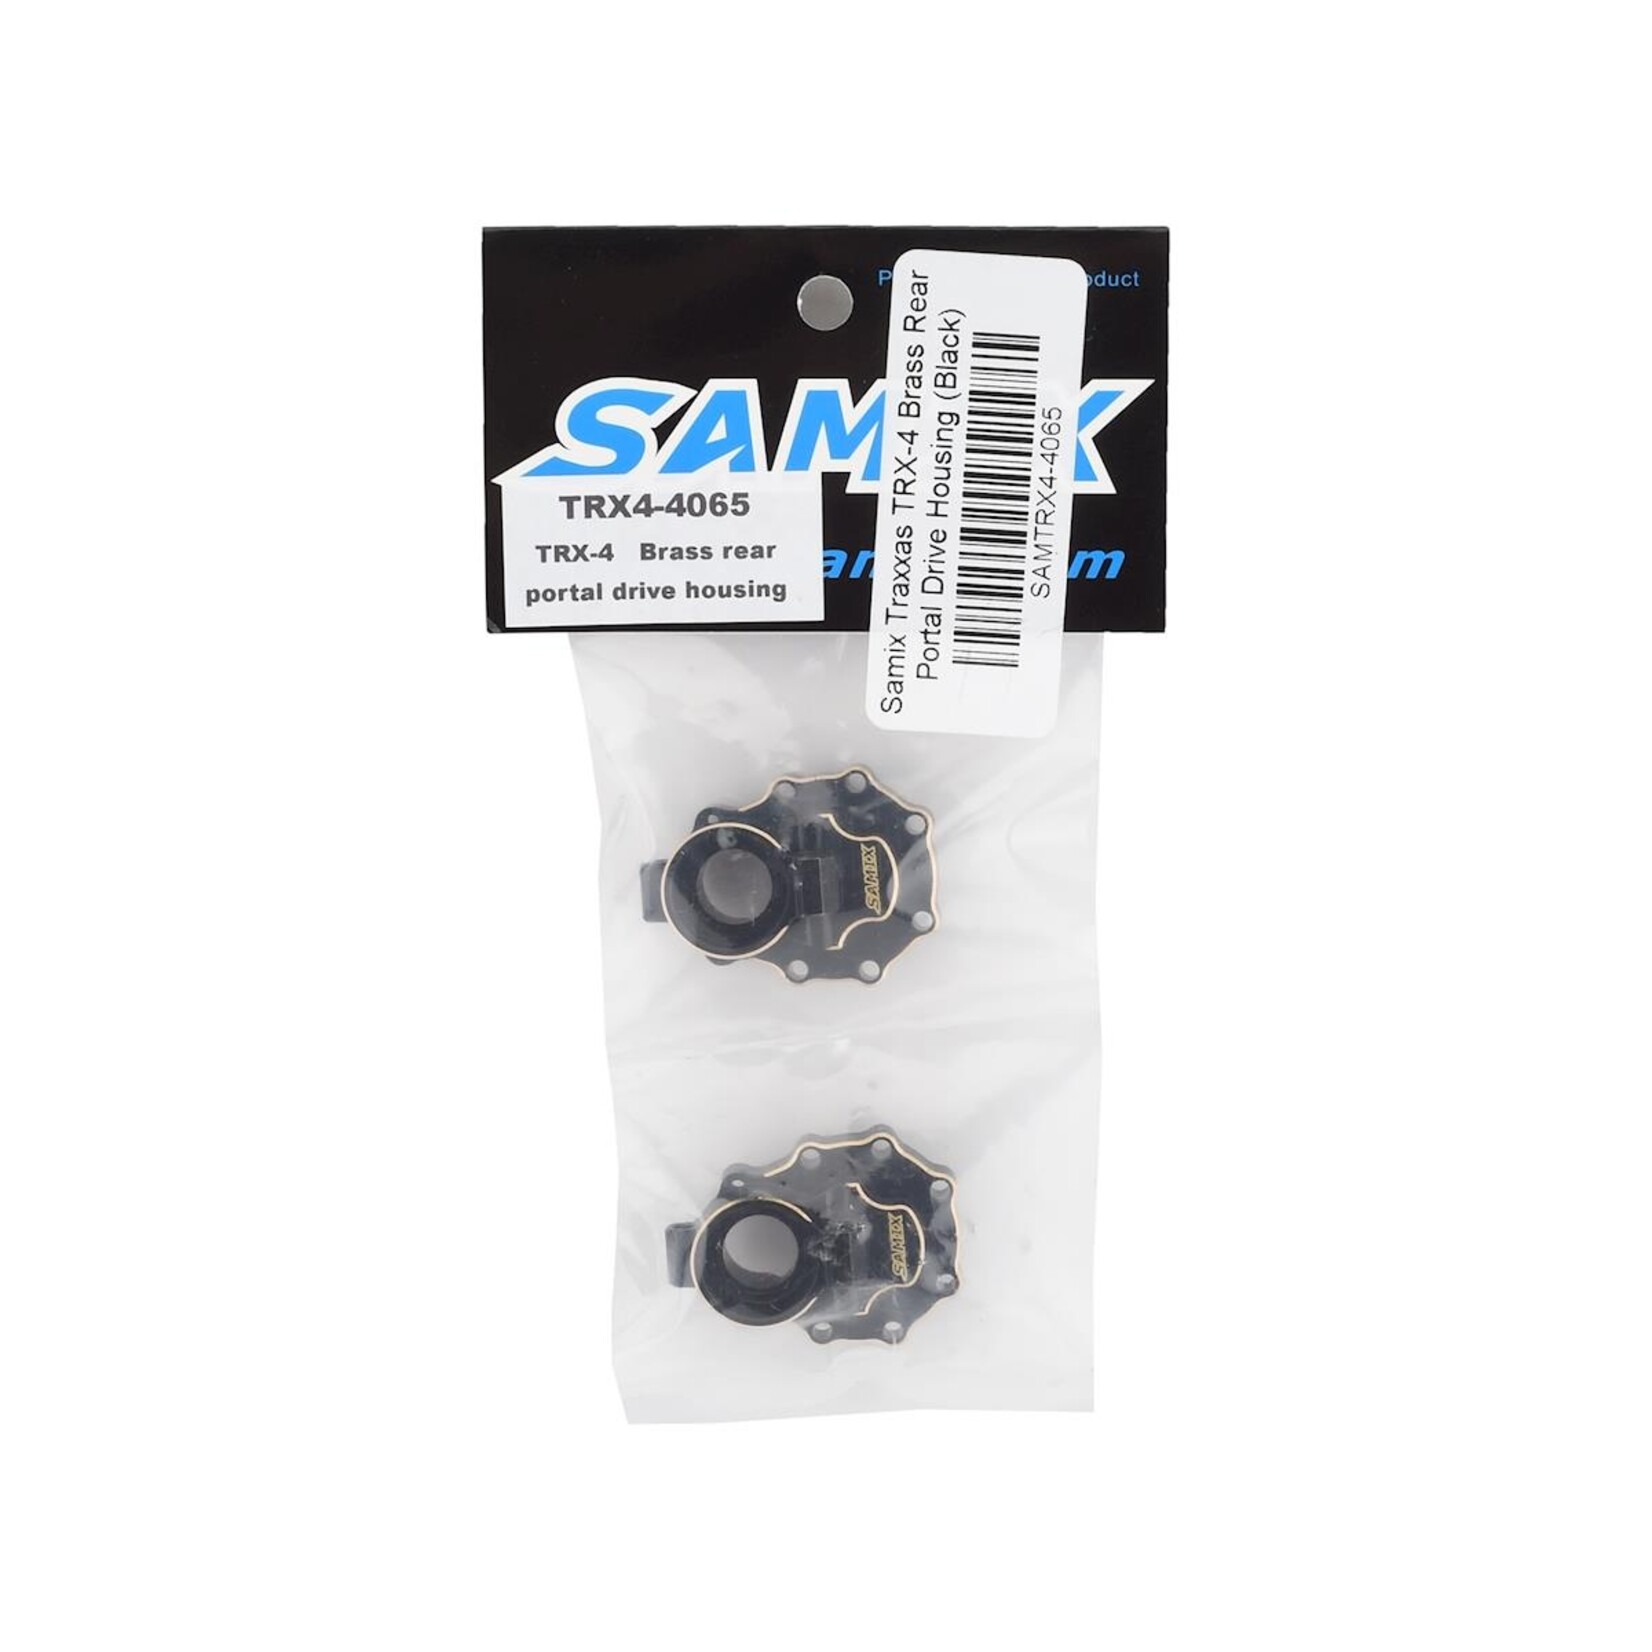 Samix Samix Traxxas TRX-4 Brass Rear Portal Drive Housing (Black) #TRX4-4065